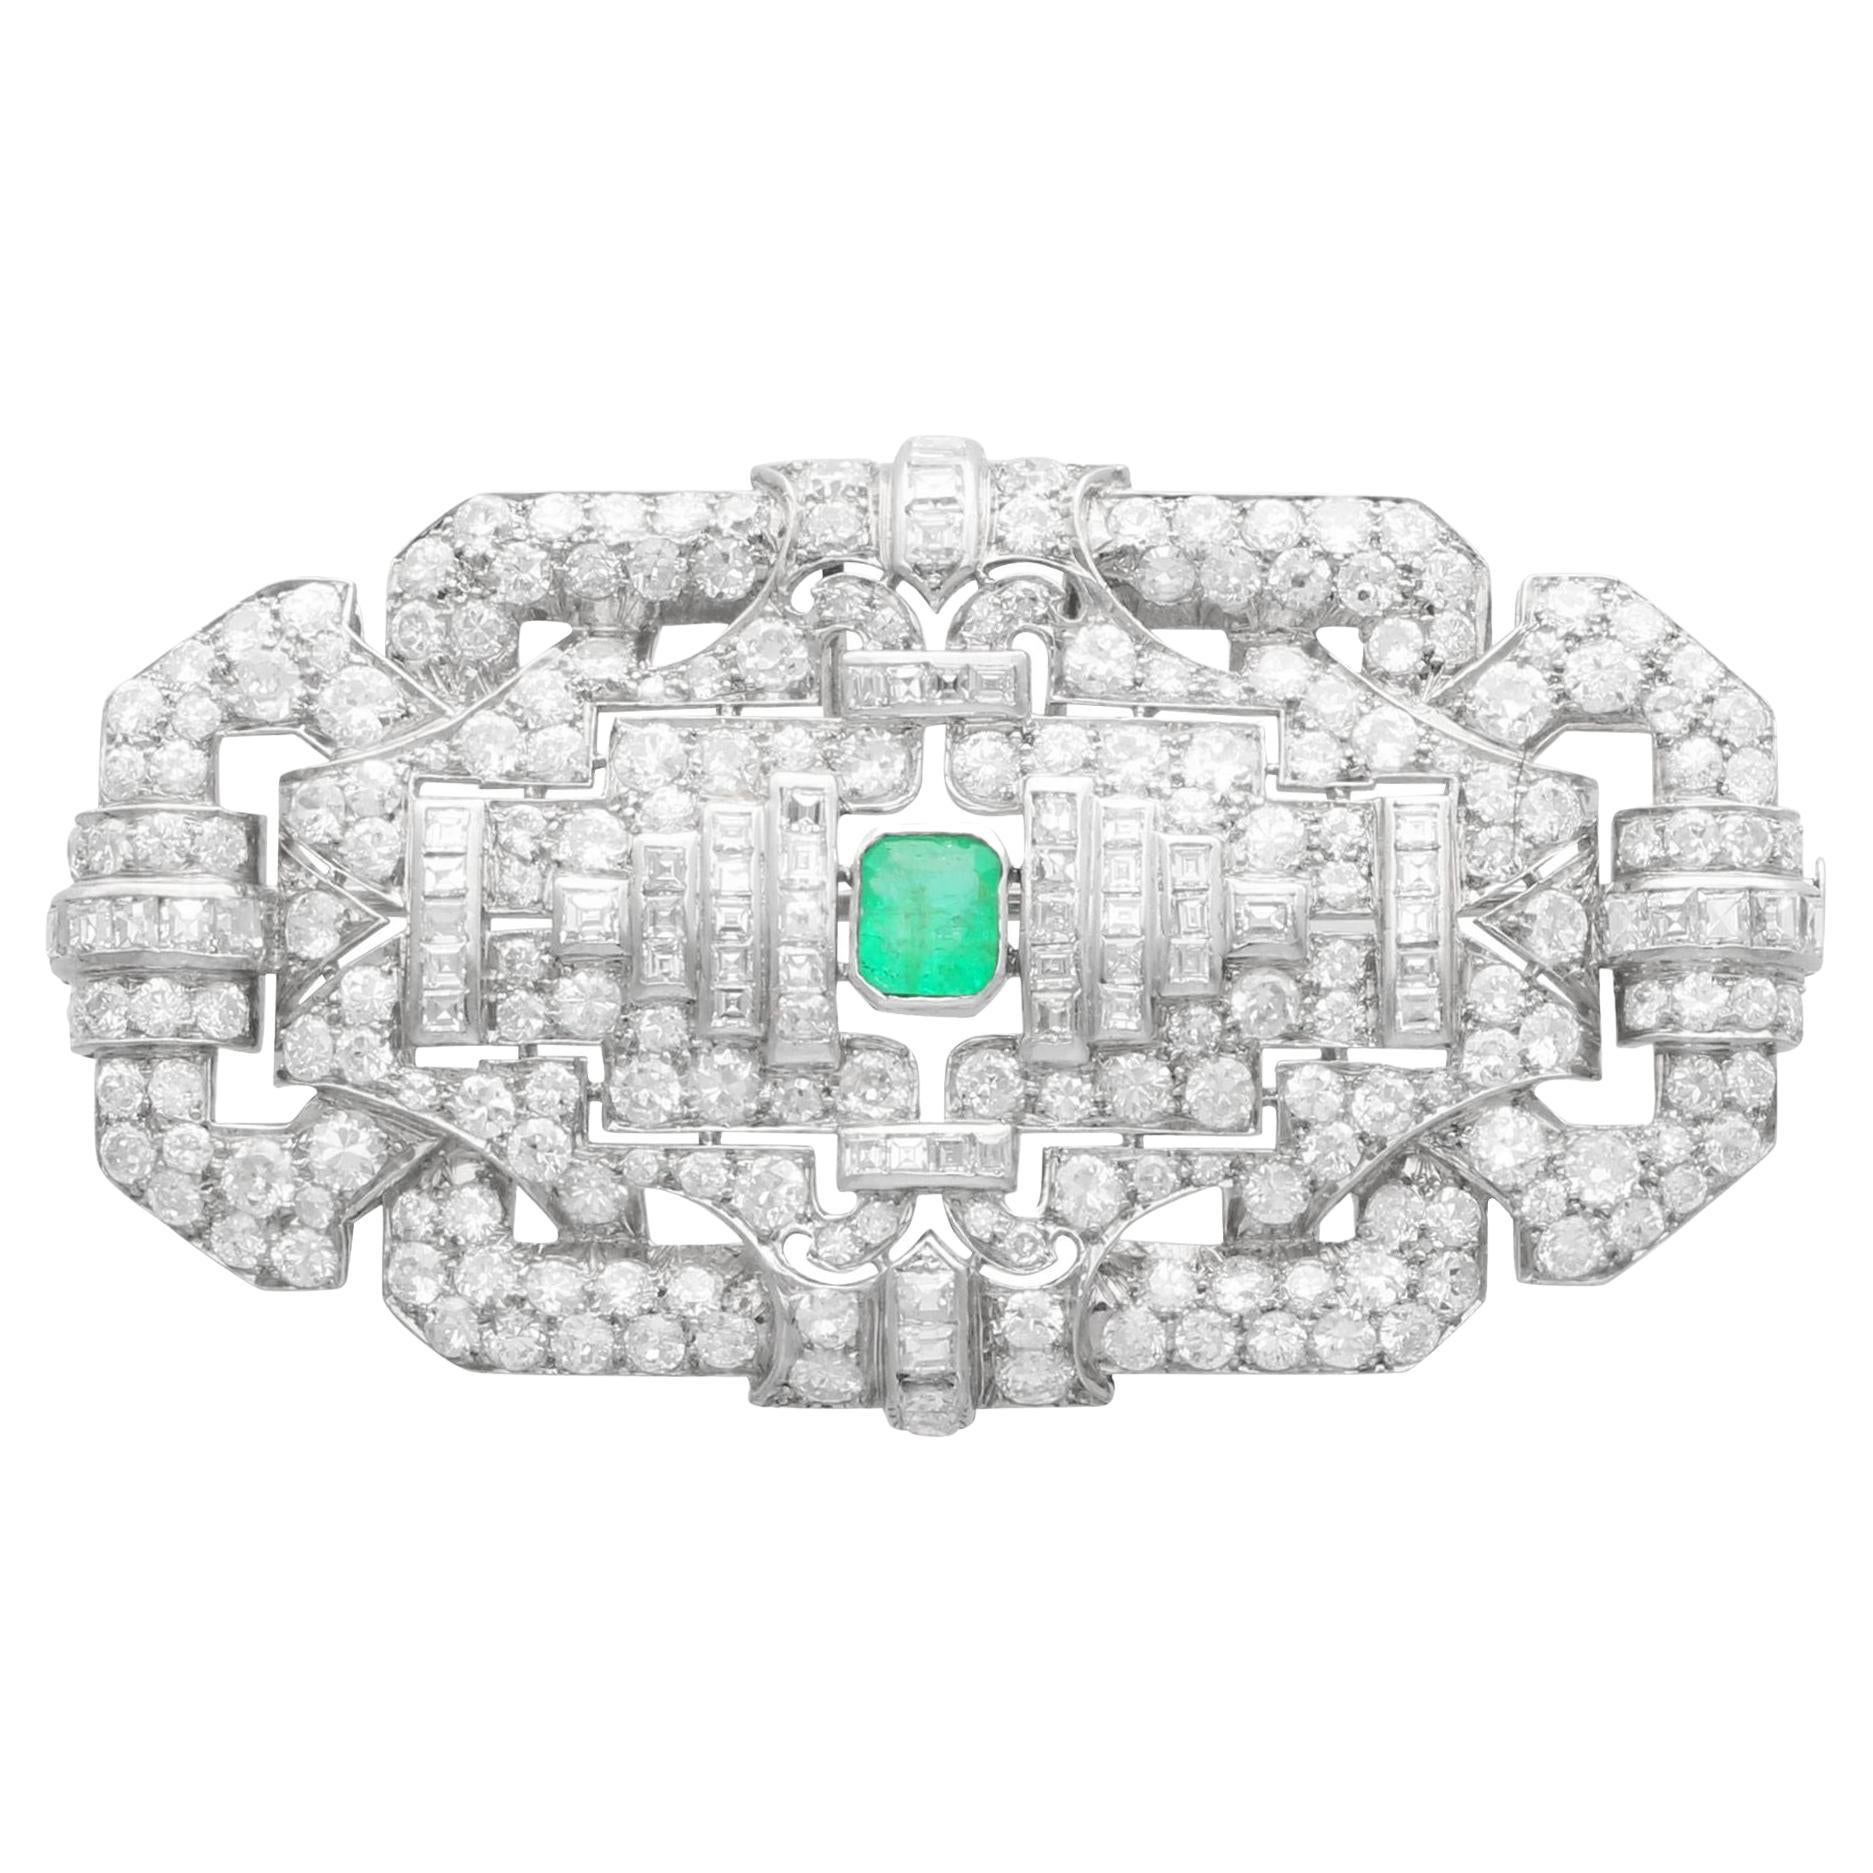 Antique Art Deco 1.02 Carat Emerald and 11.88 Carat Diamond Platinum Brooch For Sale